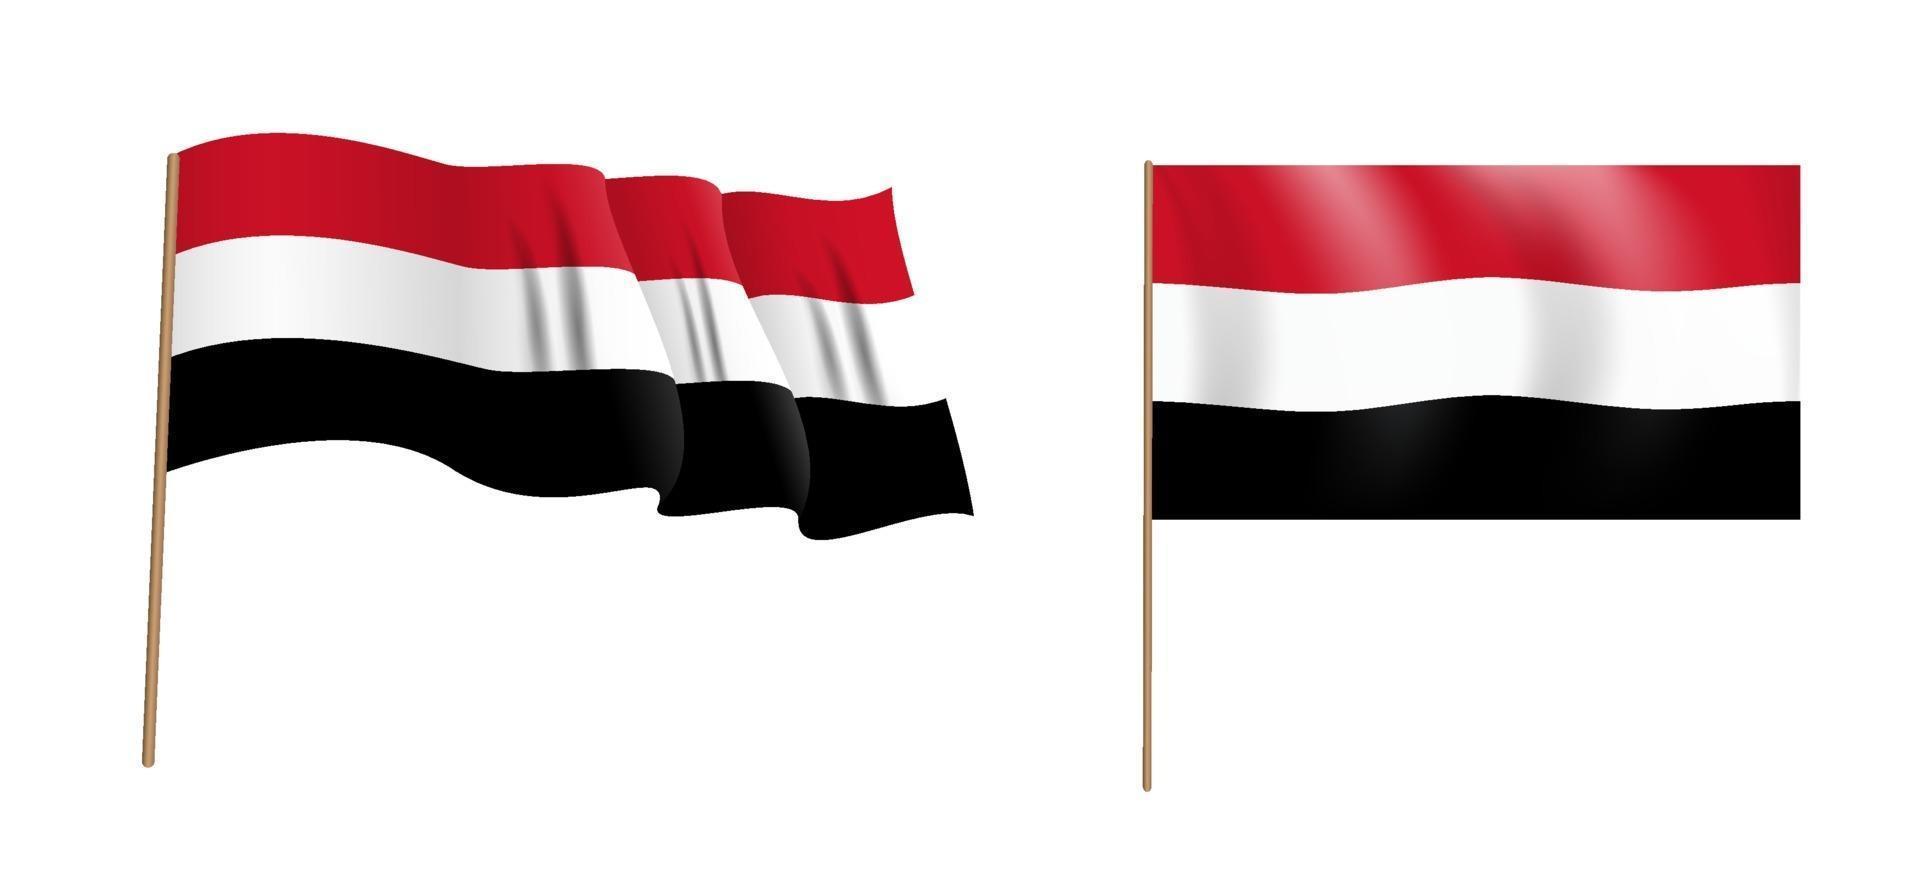 färgrik naturalistisk viftande egyptisk flagga. vektor illustration